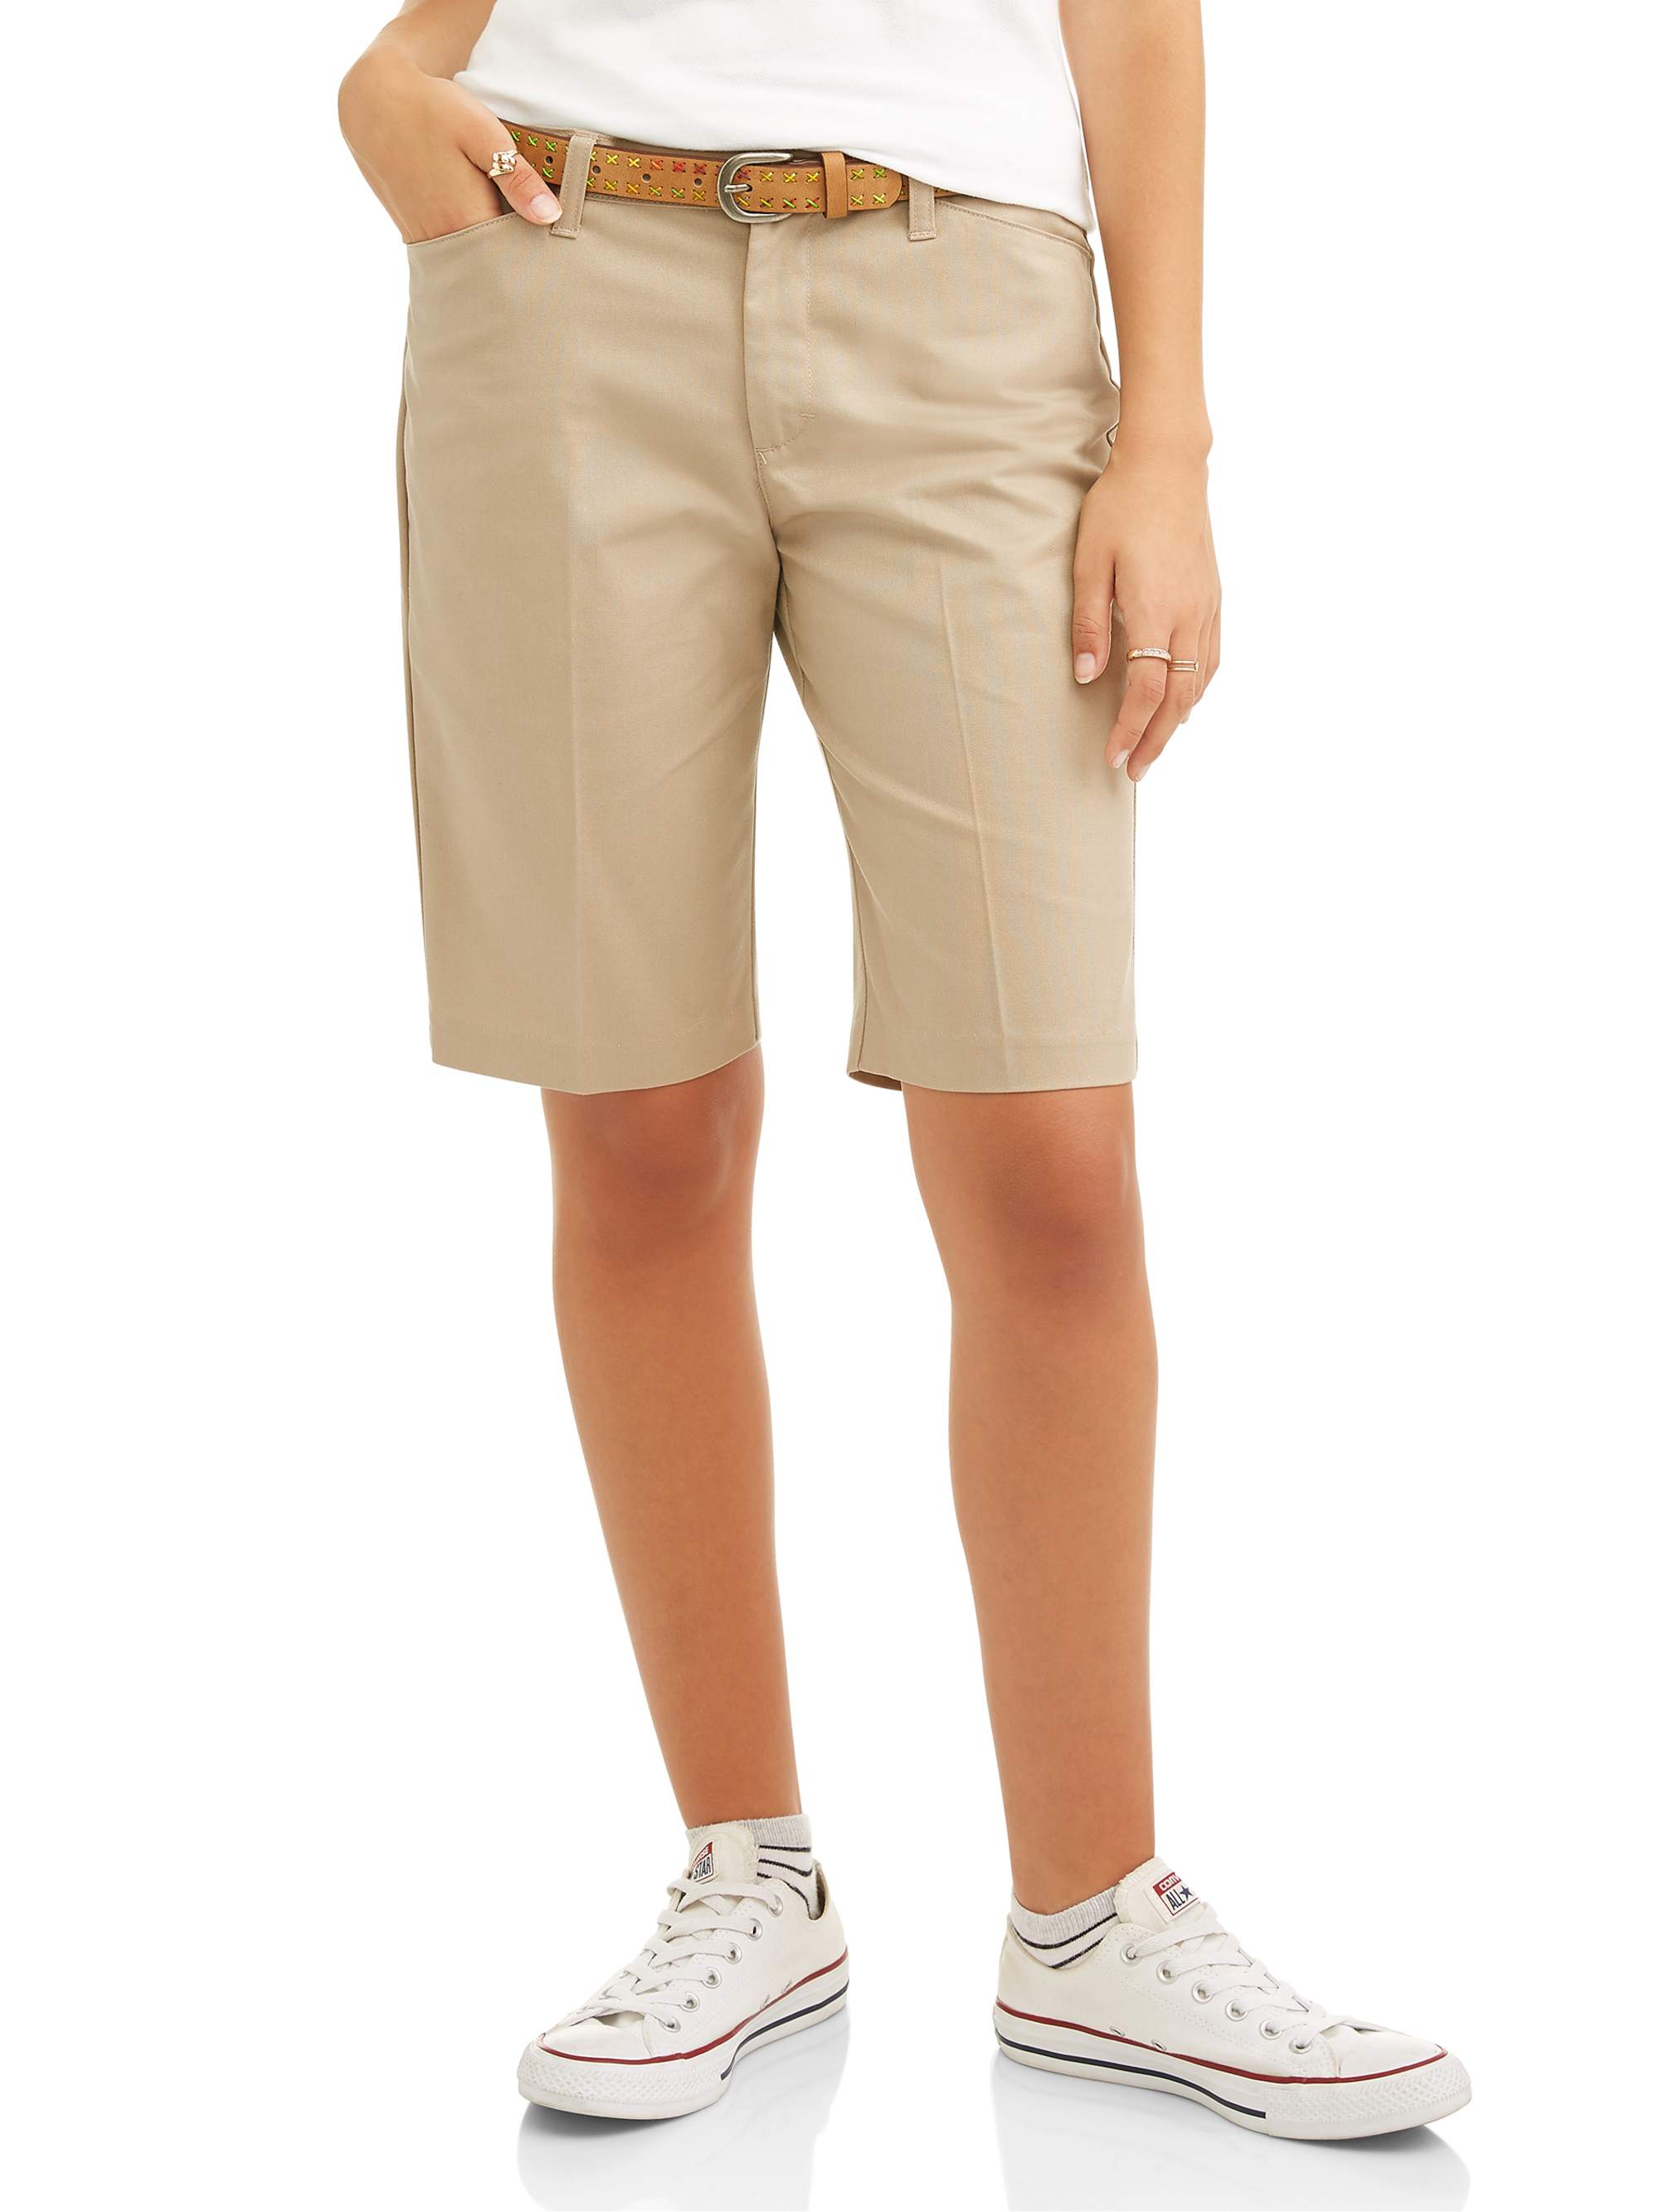 Real School Juniors' Flat Front Low Rise School Uniform Shorts - image 1 of 2